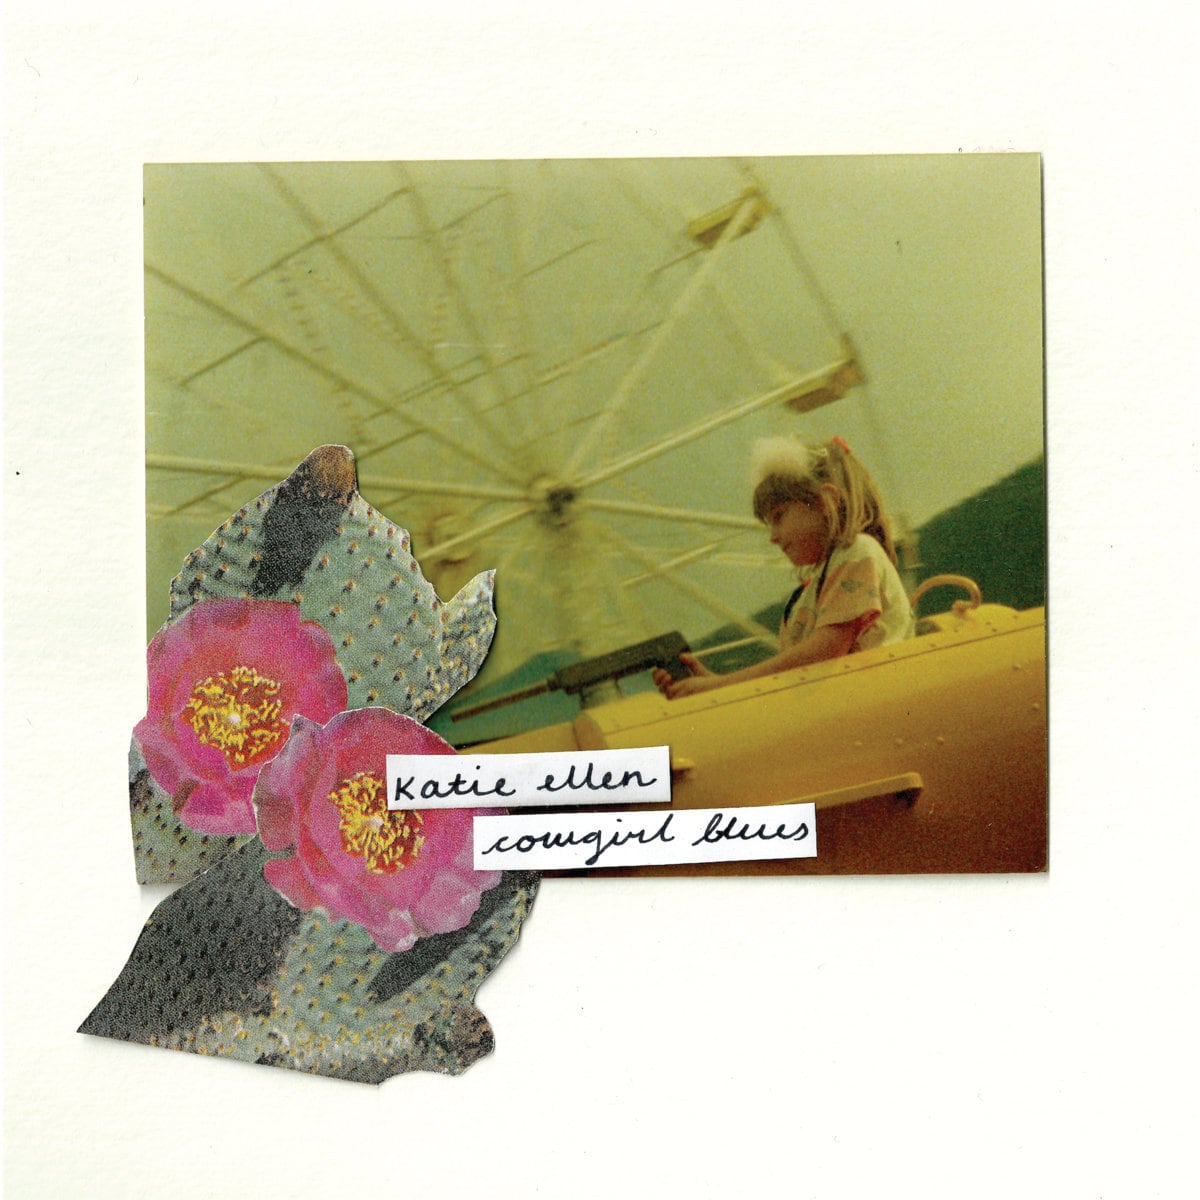 Katie Ellen / Cowgirl Blues（100 Ltd LP）